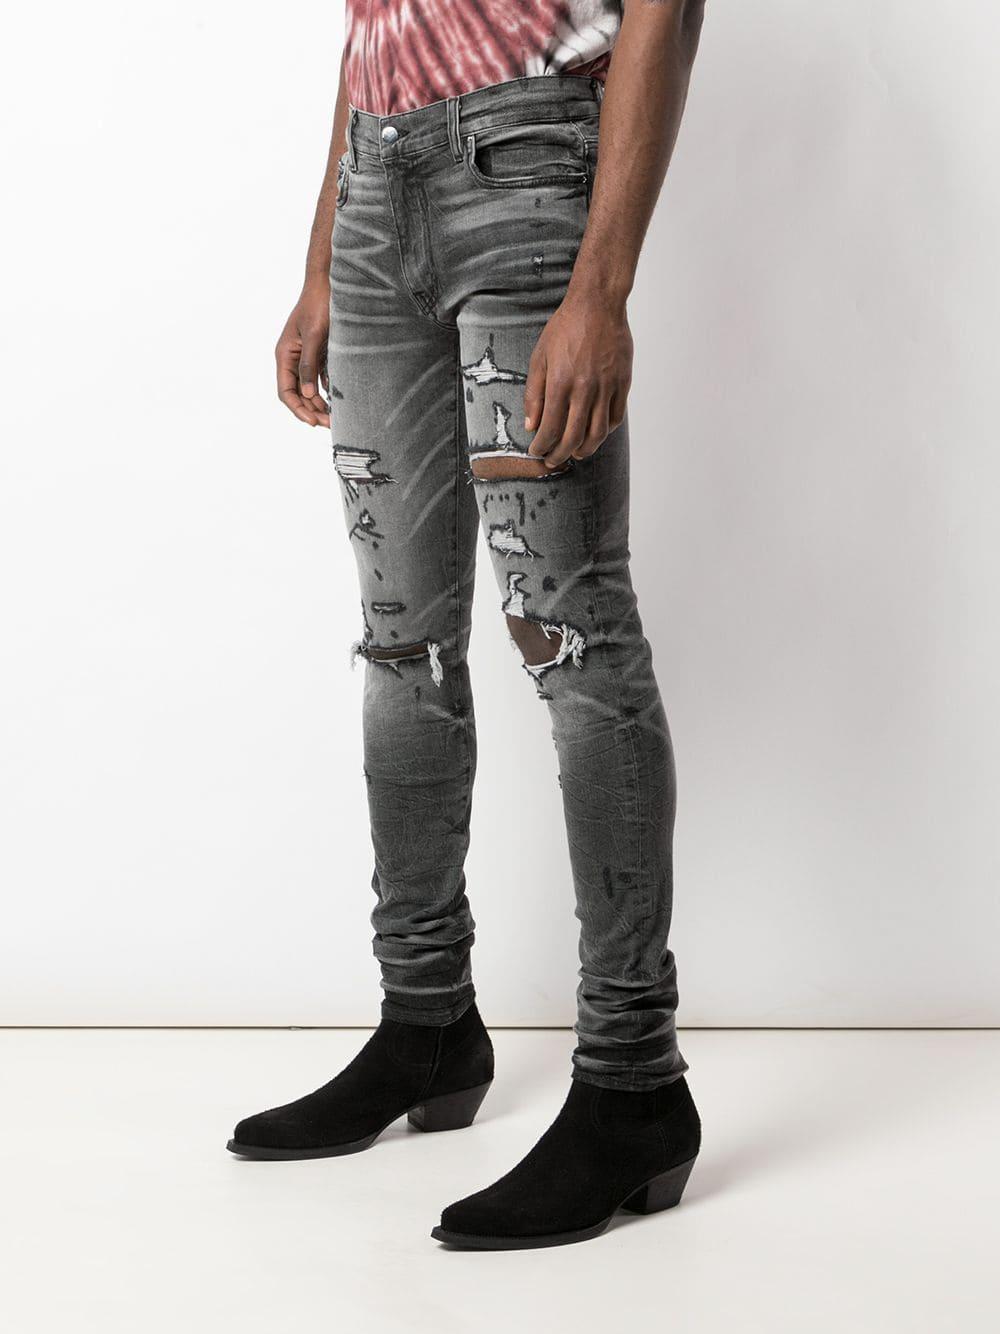 Amiri Denim Ripped Jeans in Grey (Gray) for Men - Lyst